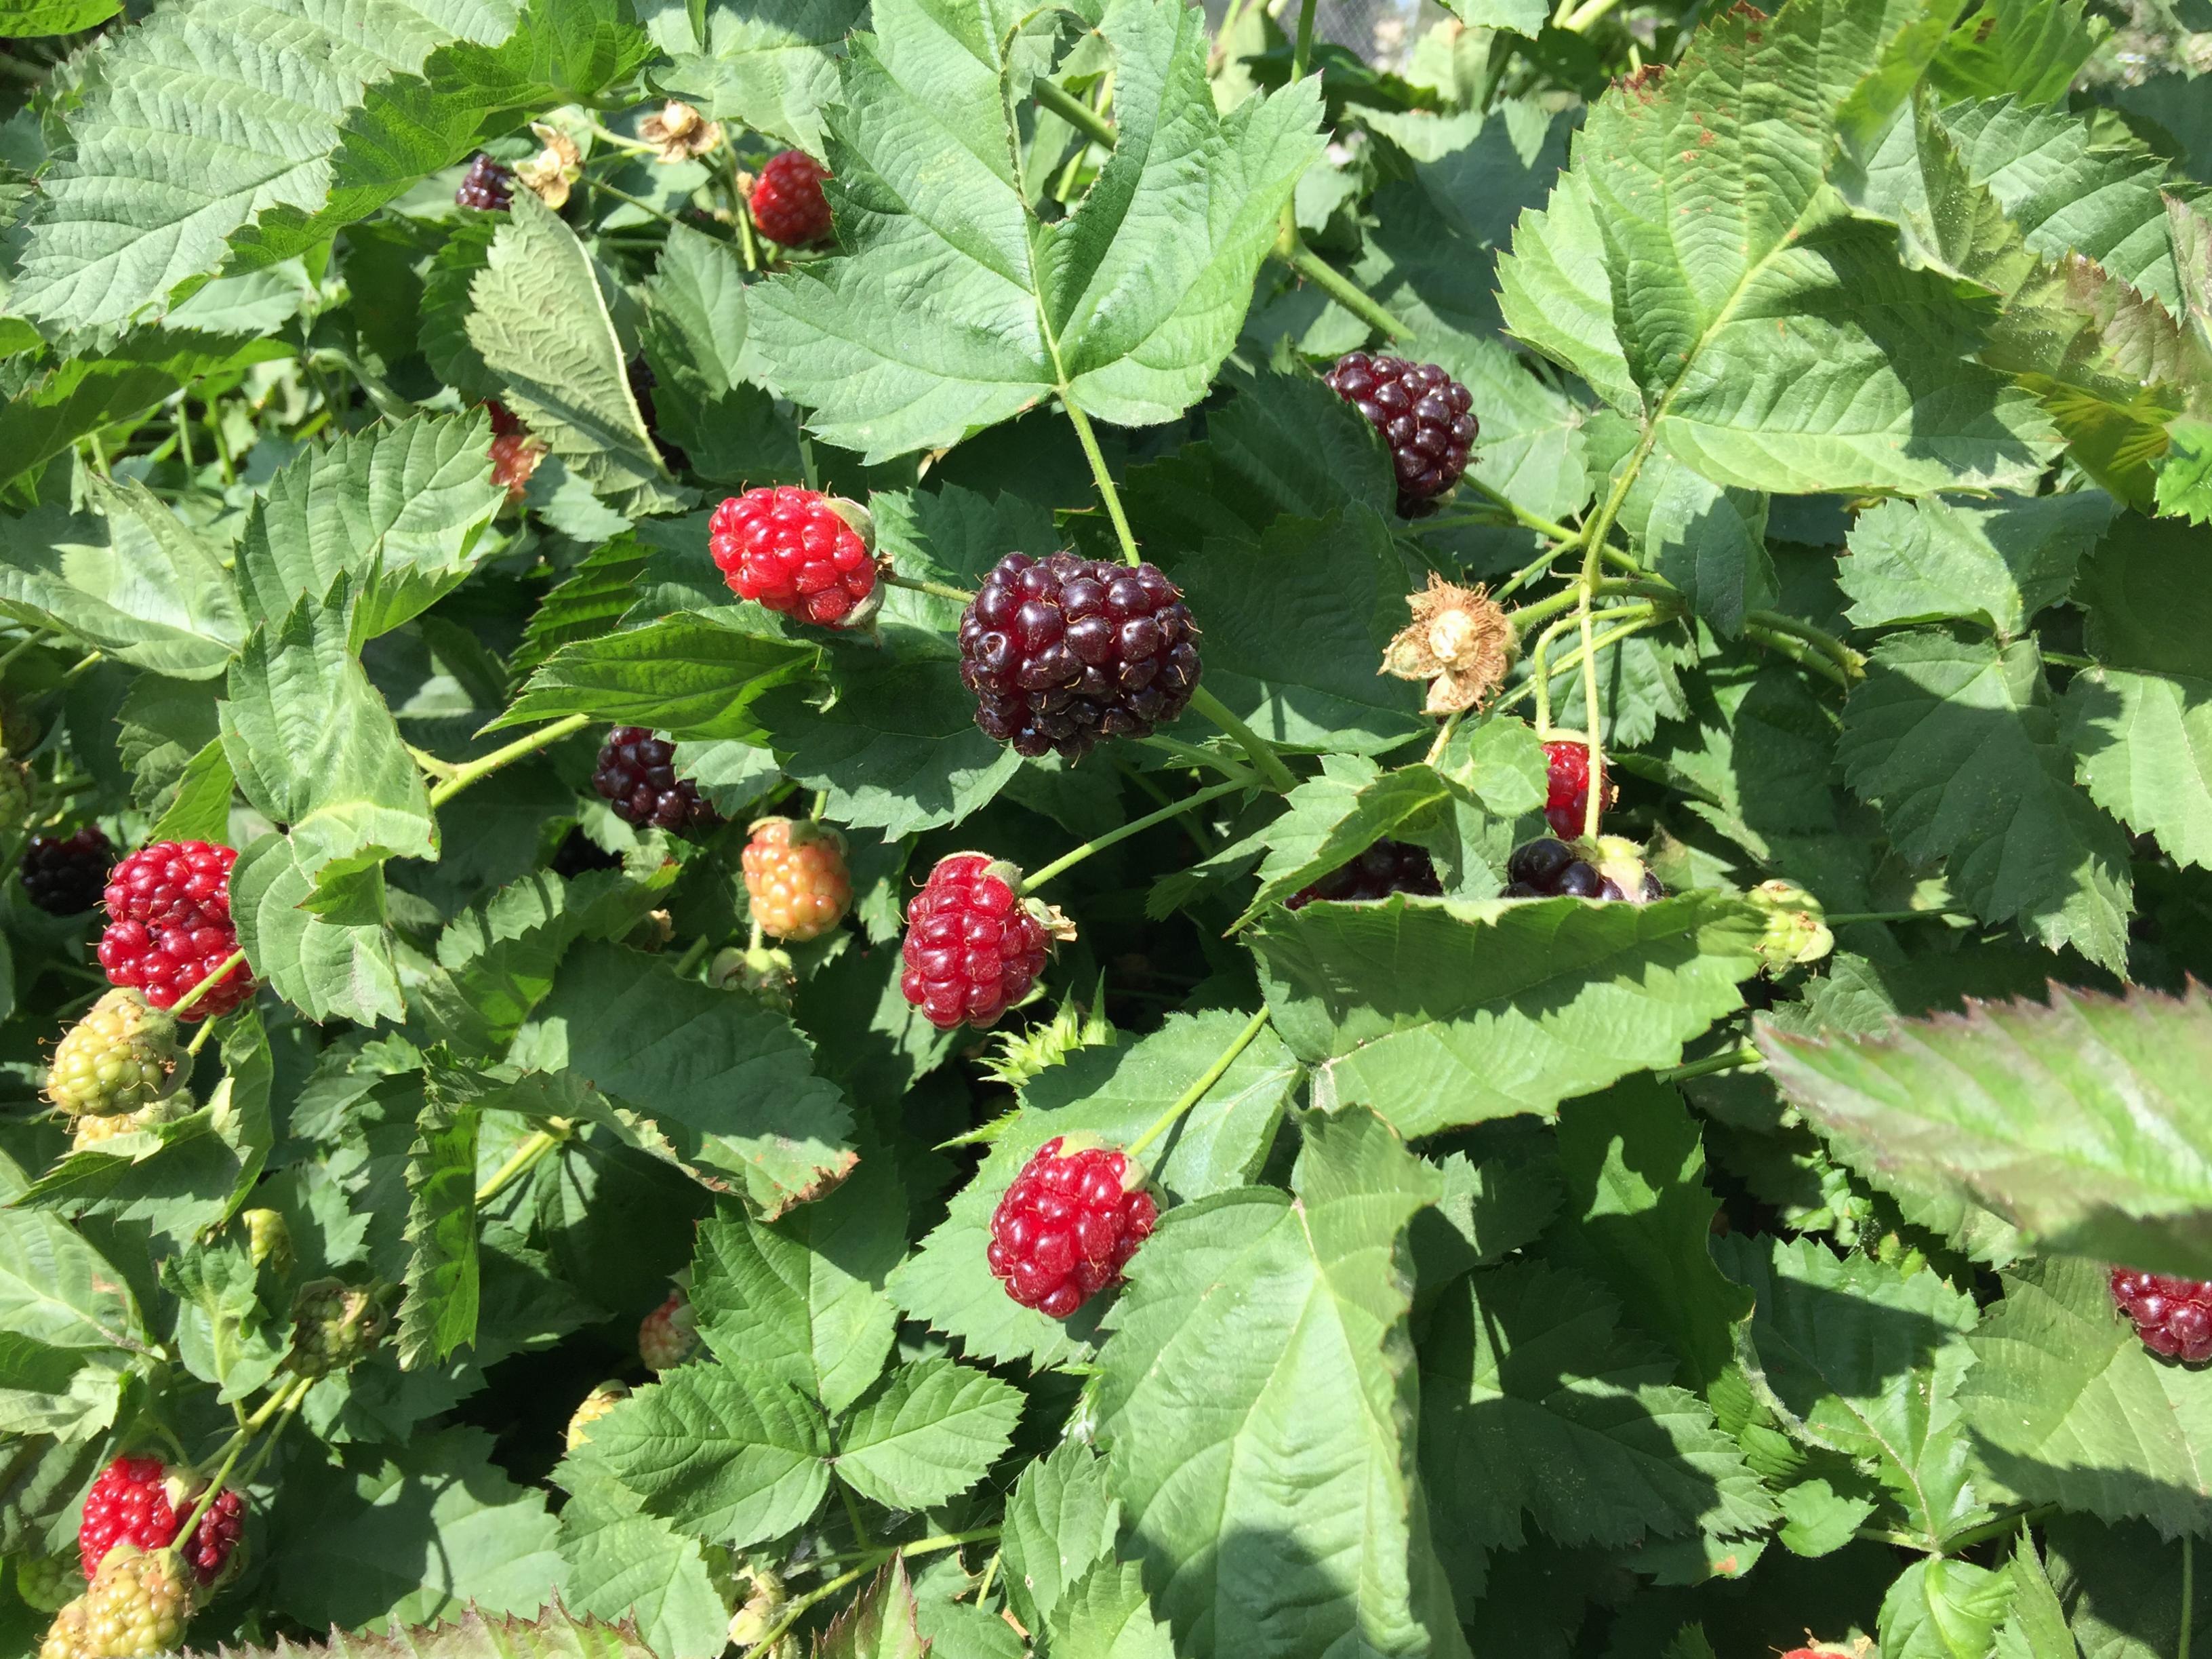 Picking Boysenberries